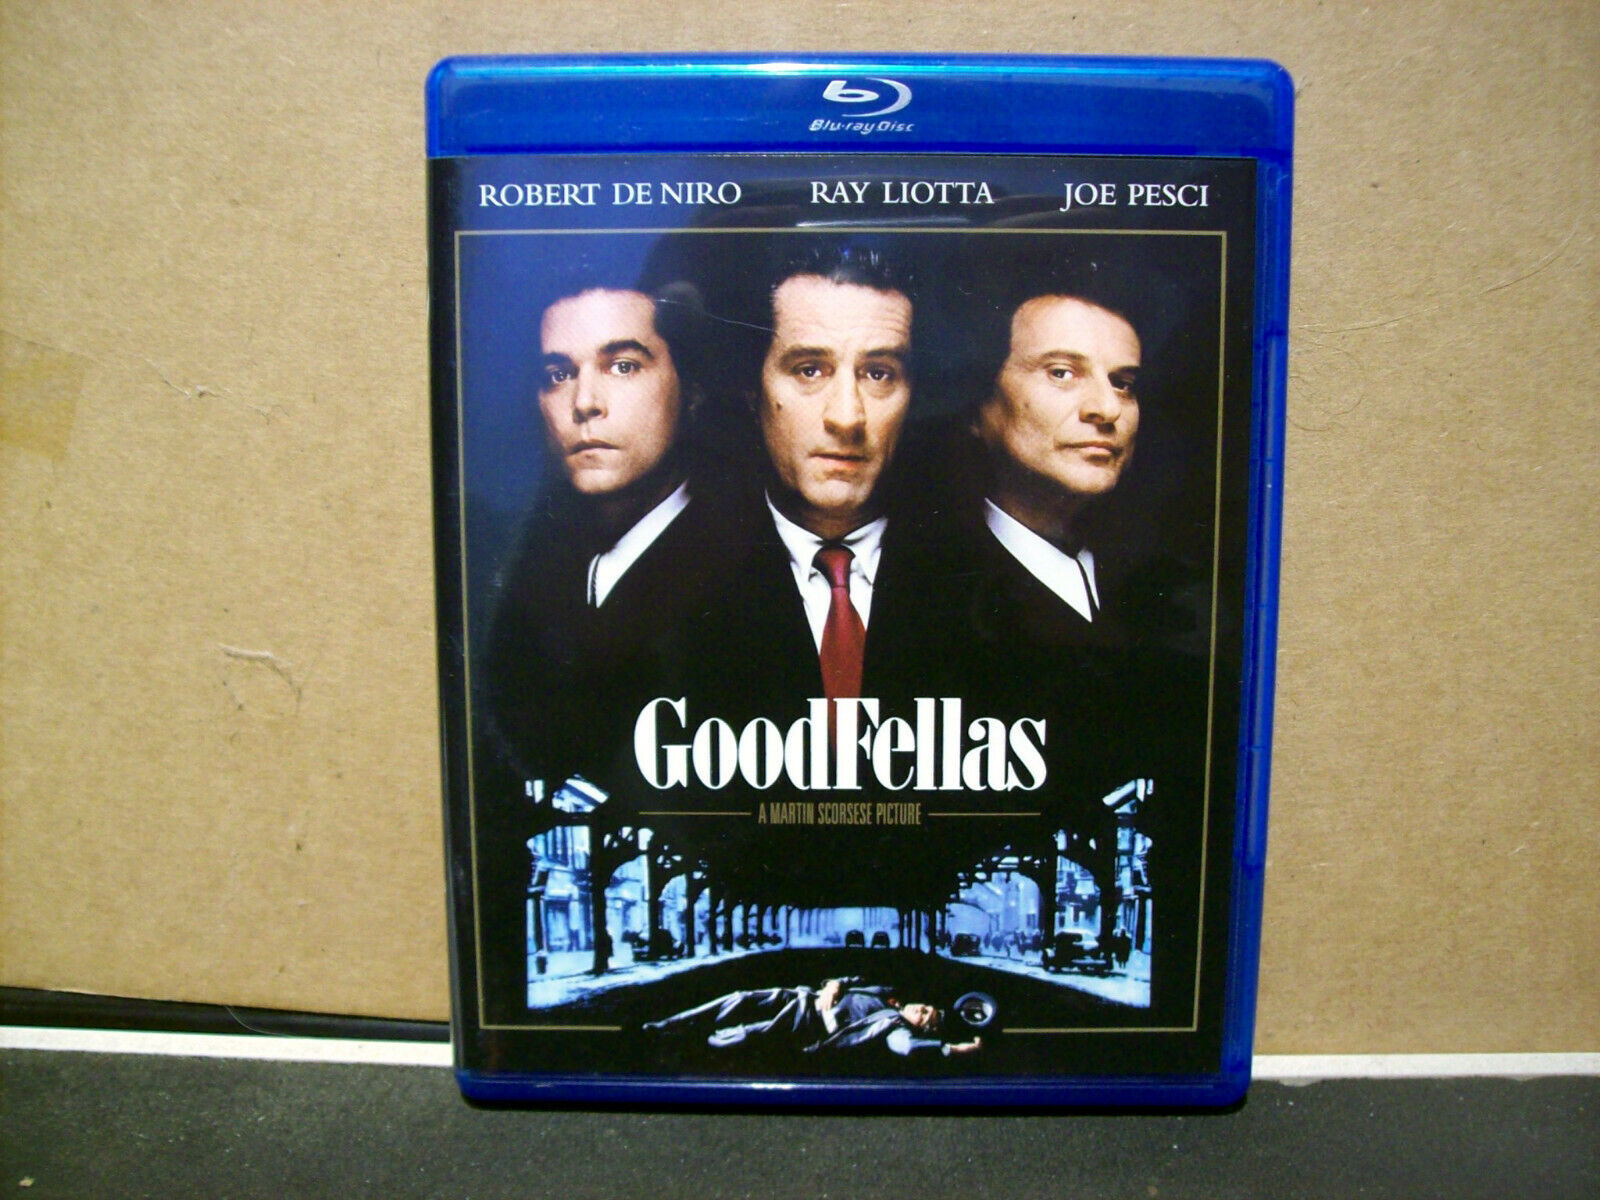 Primary image for Goodfellas (Blu-ray Disc, 2007) De Niro, Liotta, Pesci. Like New